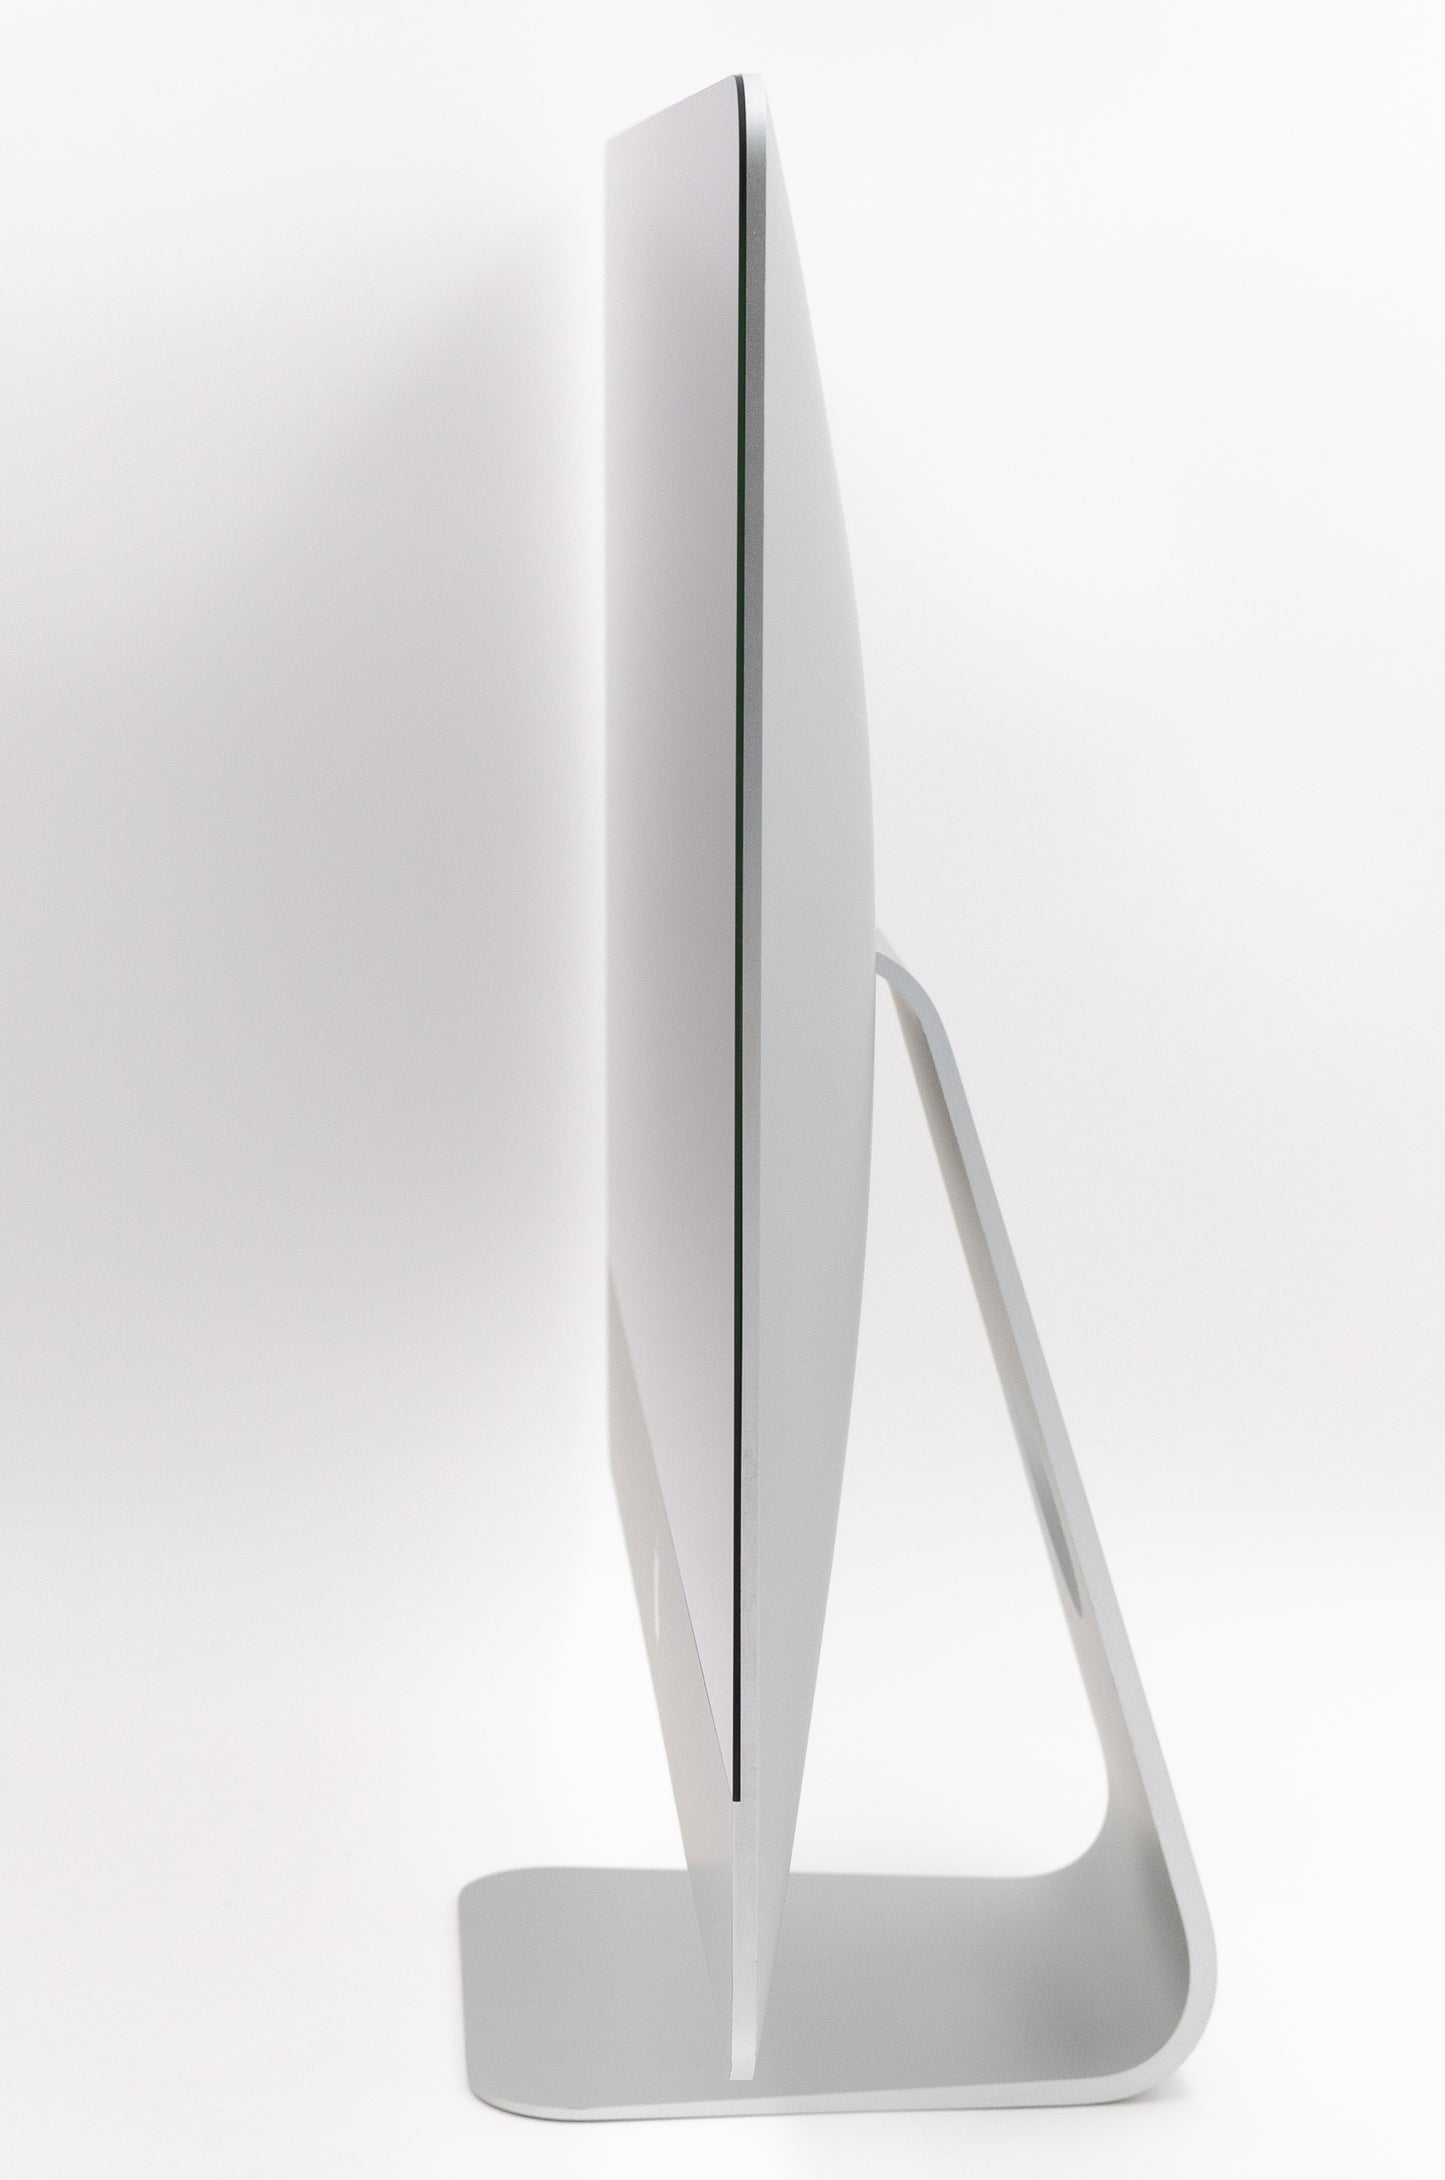 apple-late-2013-21.5-inch-imac-ultra-thin-a1418-aluminum-qci5 - 2.7ghz, 8gb ram, gt 750m - 1gb gpu-3